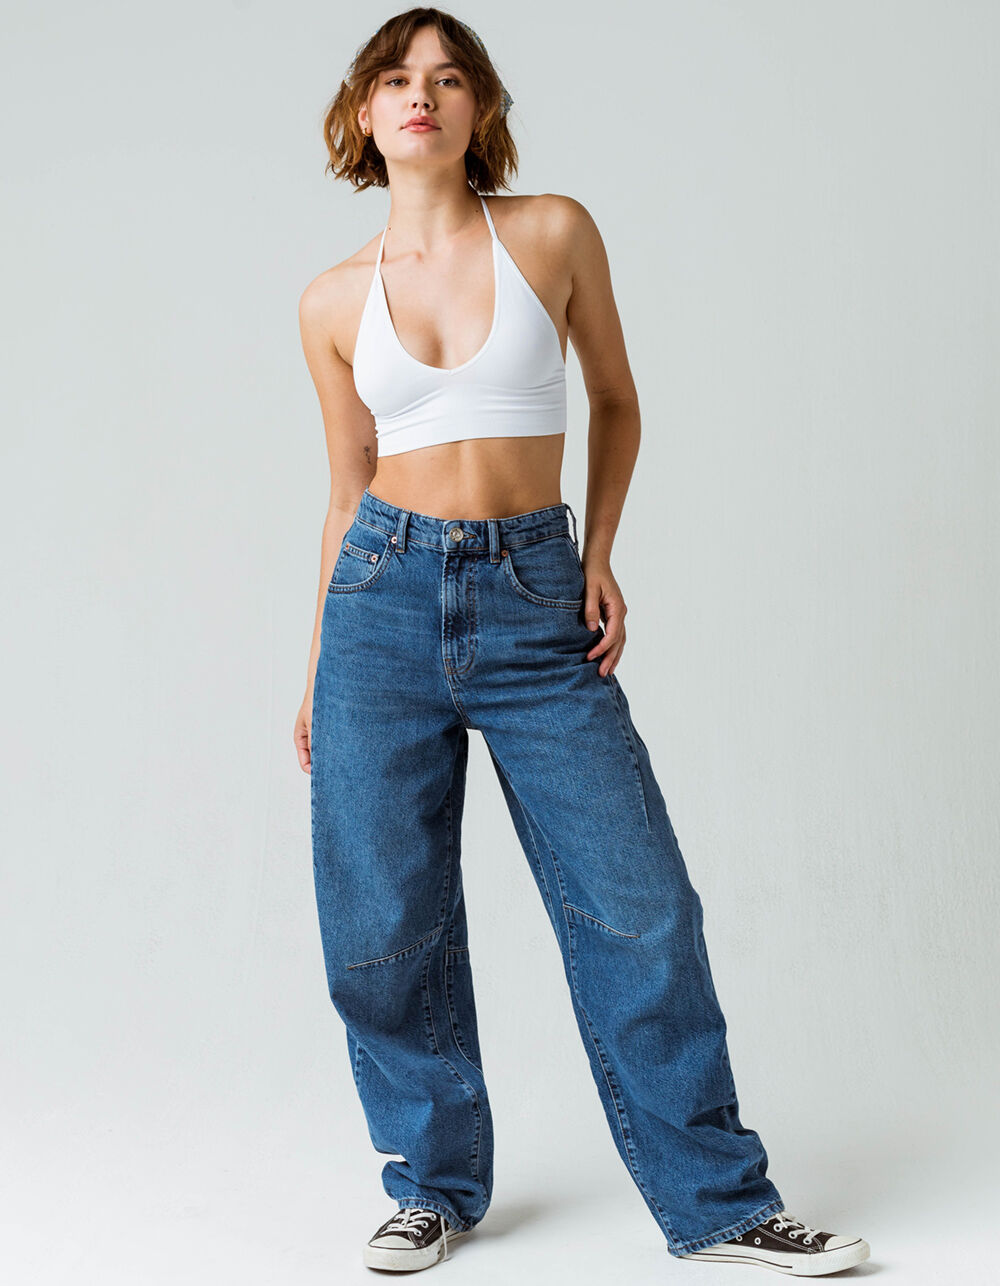 DARK Jeans | Barell VINTAGE BDG - Urban Logan Leg Tillys Outfitters Womens